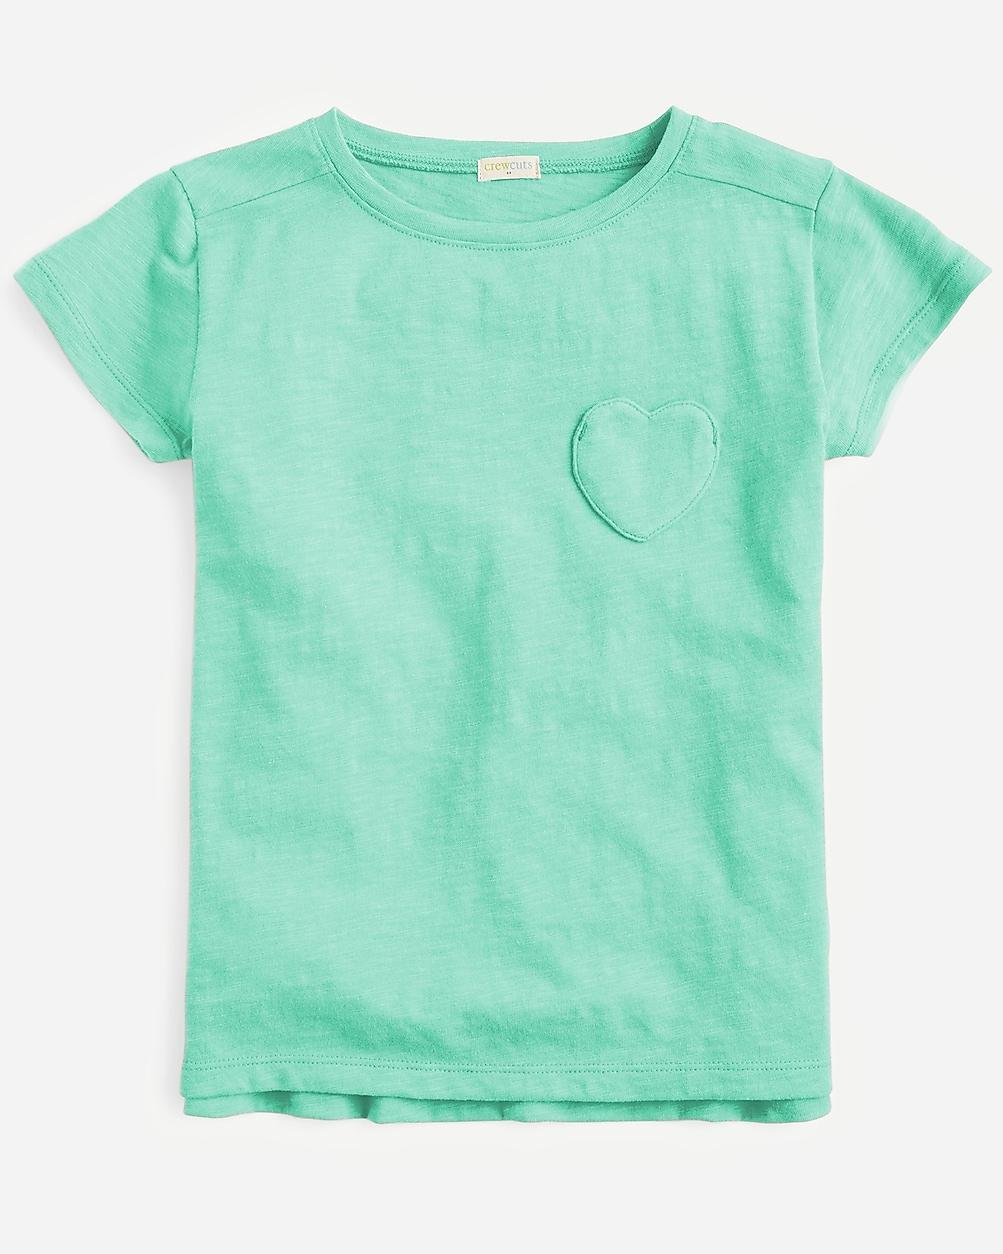 Girls' short-sleeve heart-pocket T-shirt by J.CREW